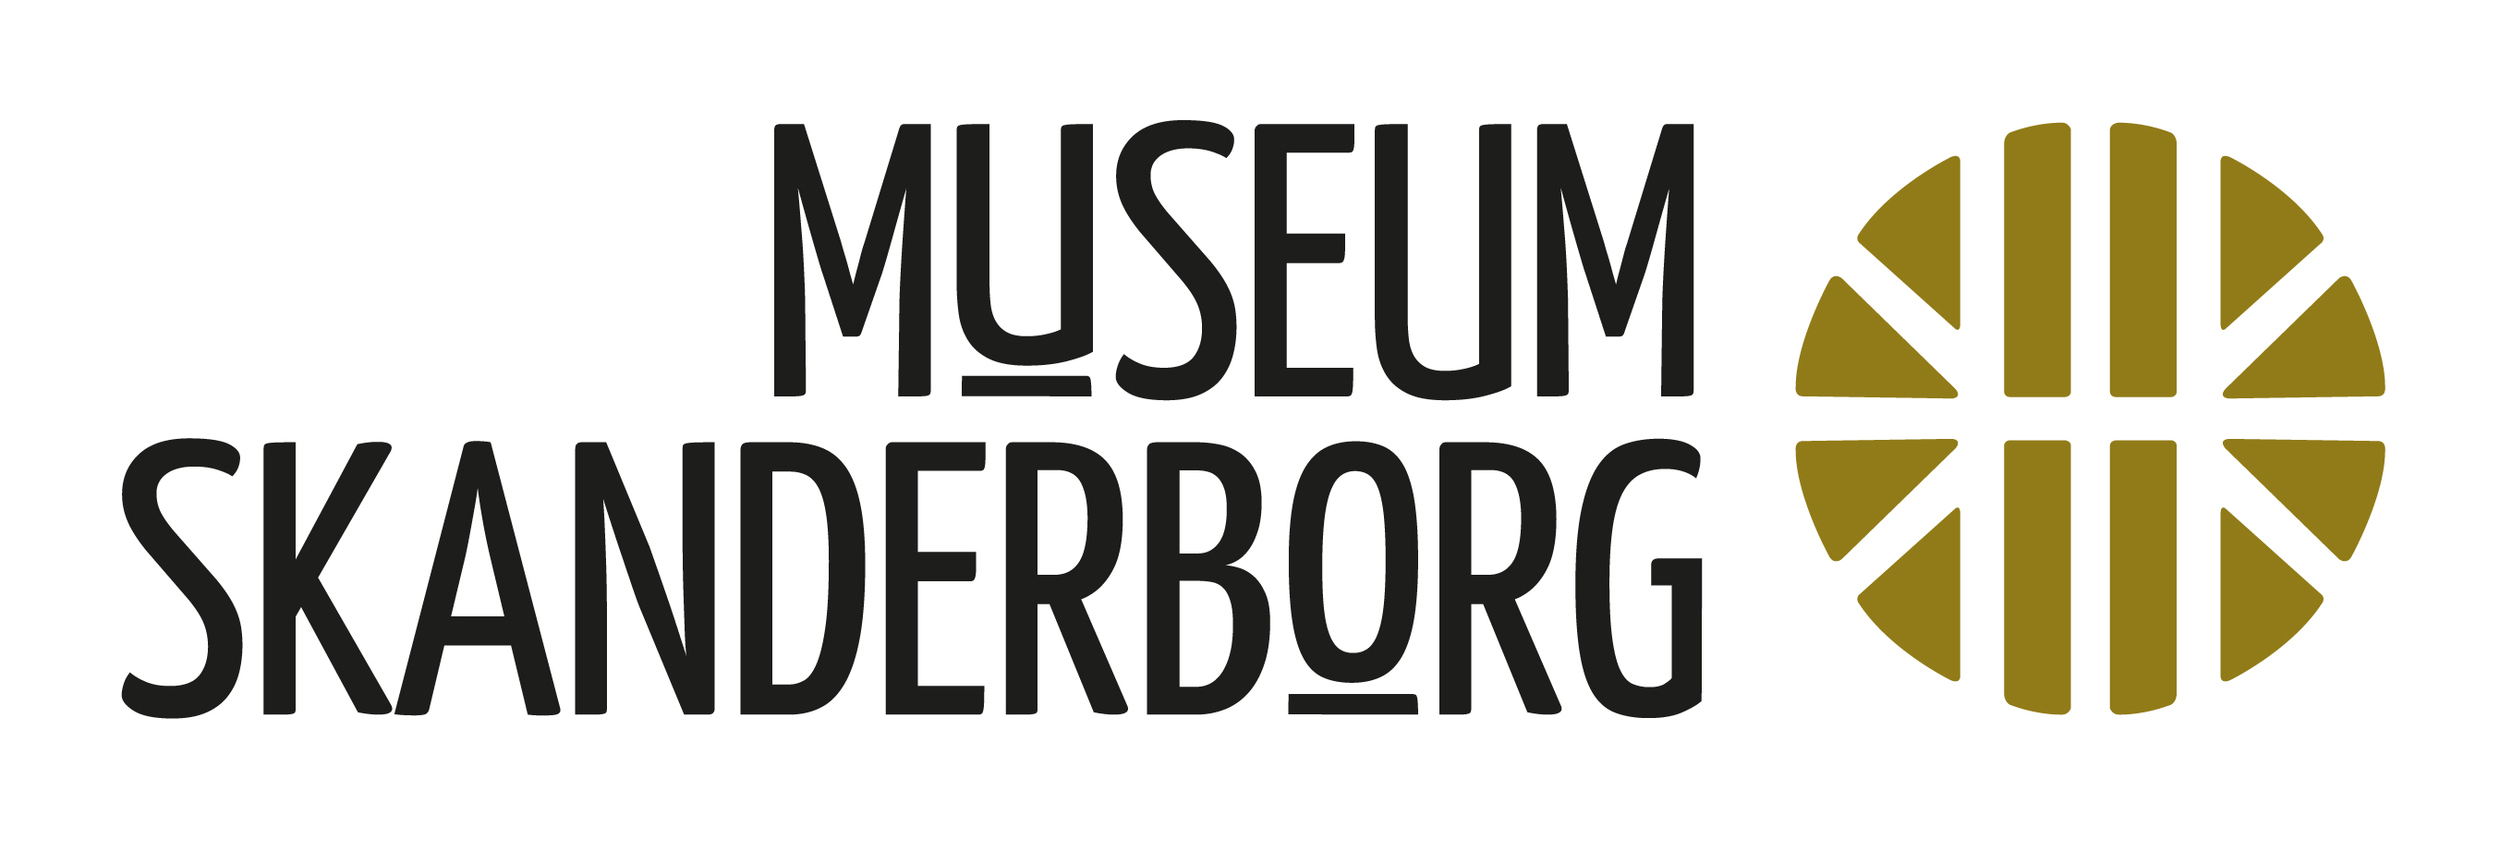 Museum Skanderborg